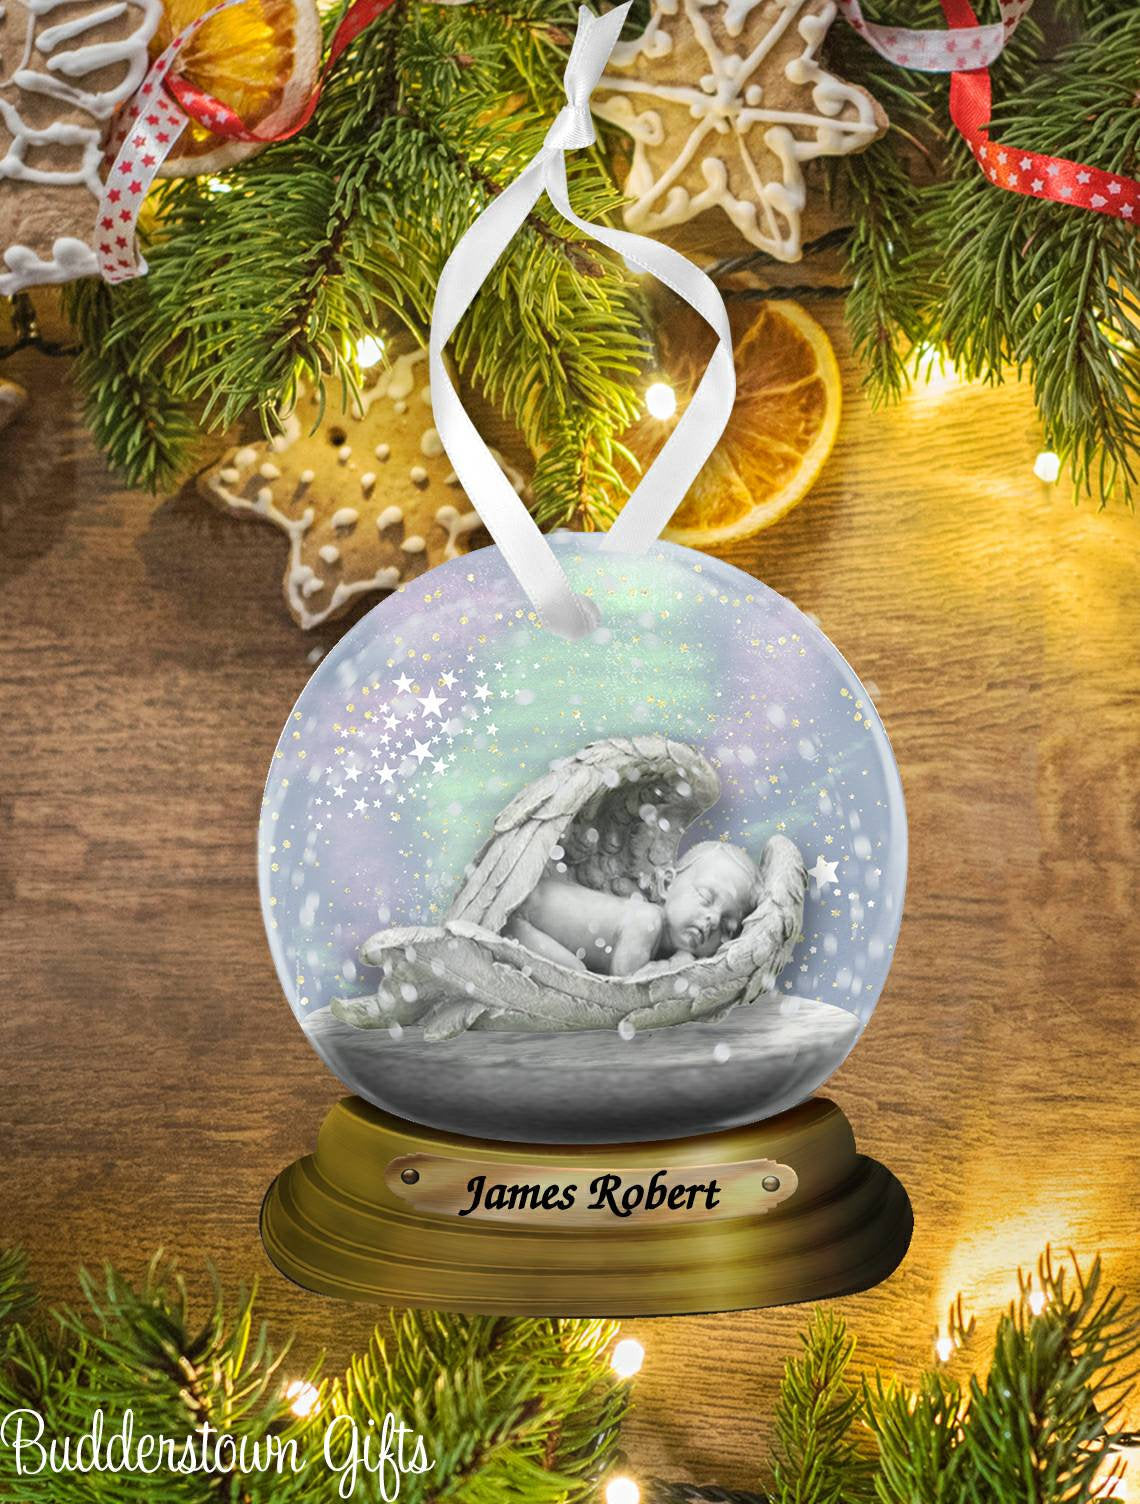 Memorial Baby Angel Snow globe Ornament